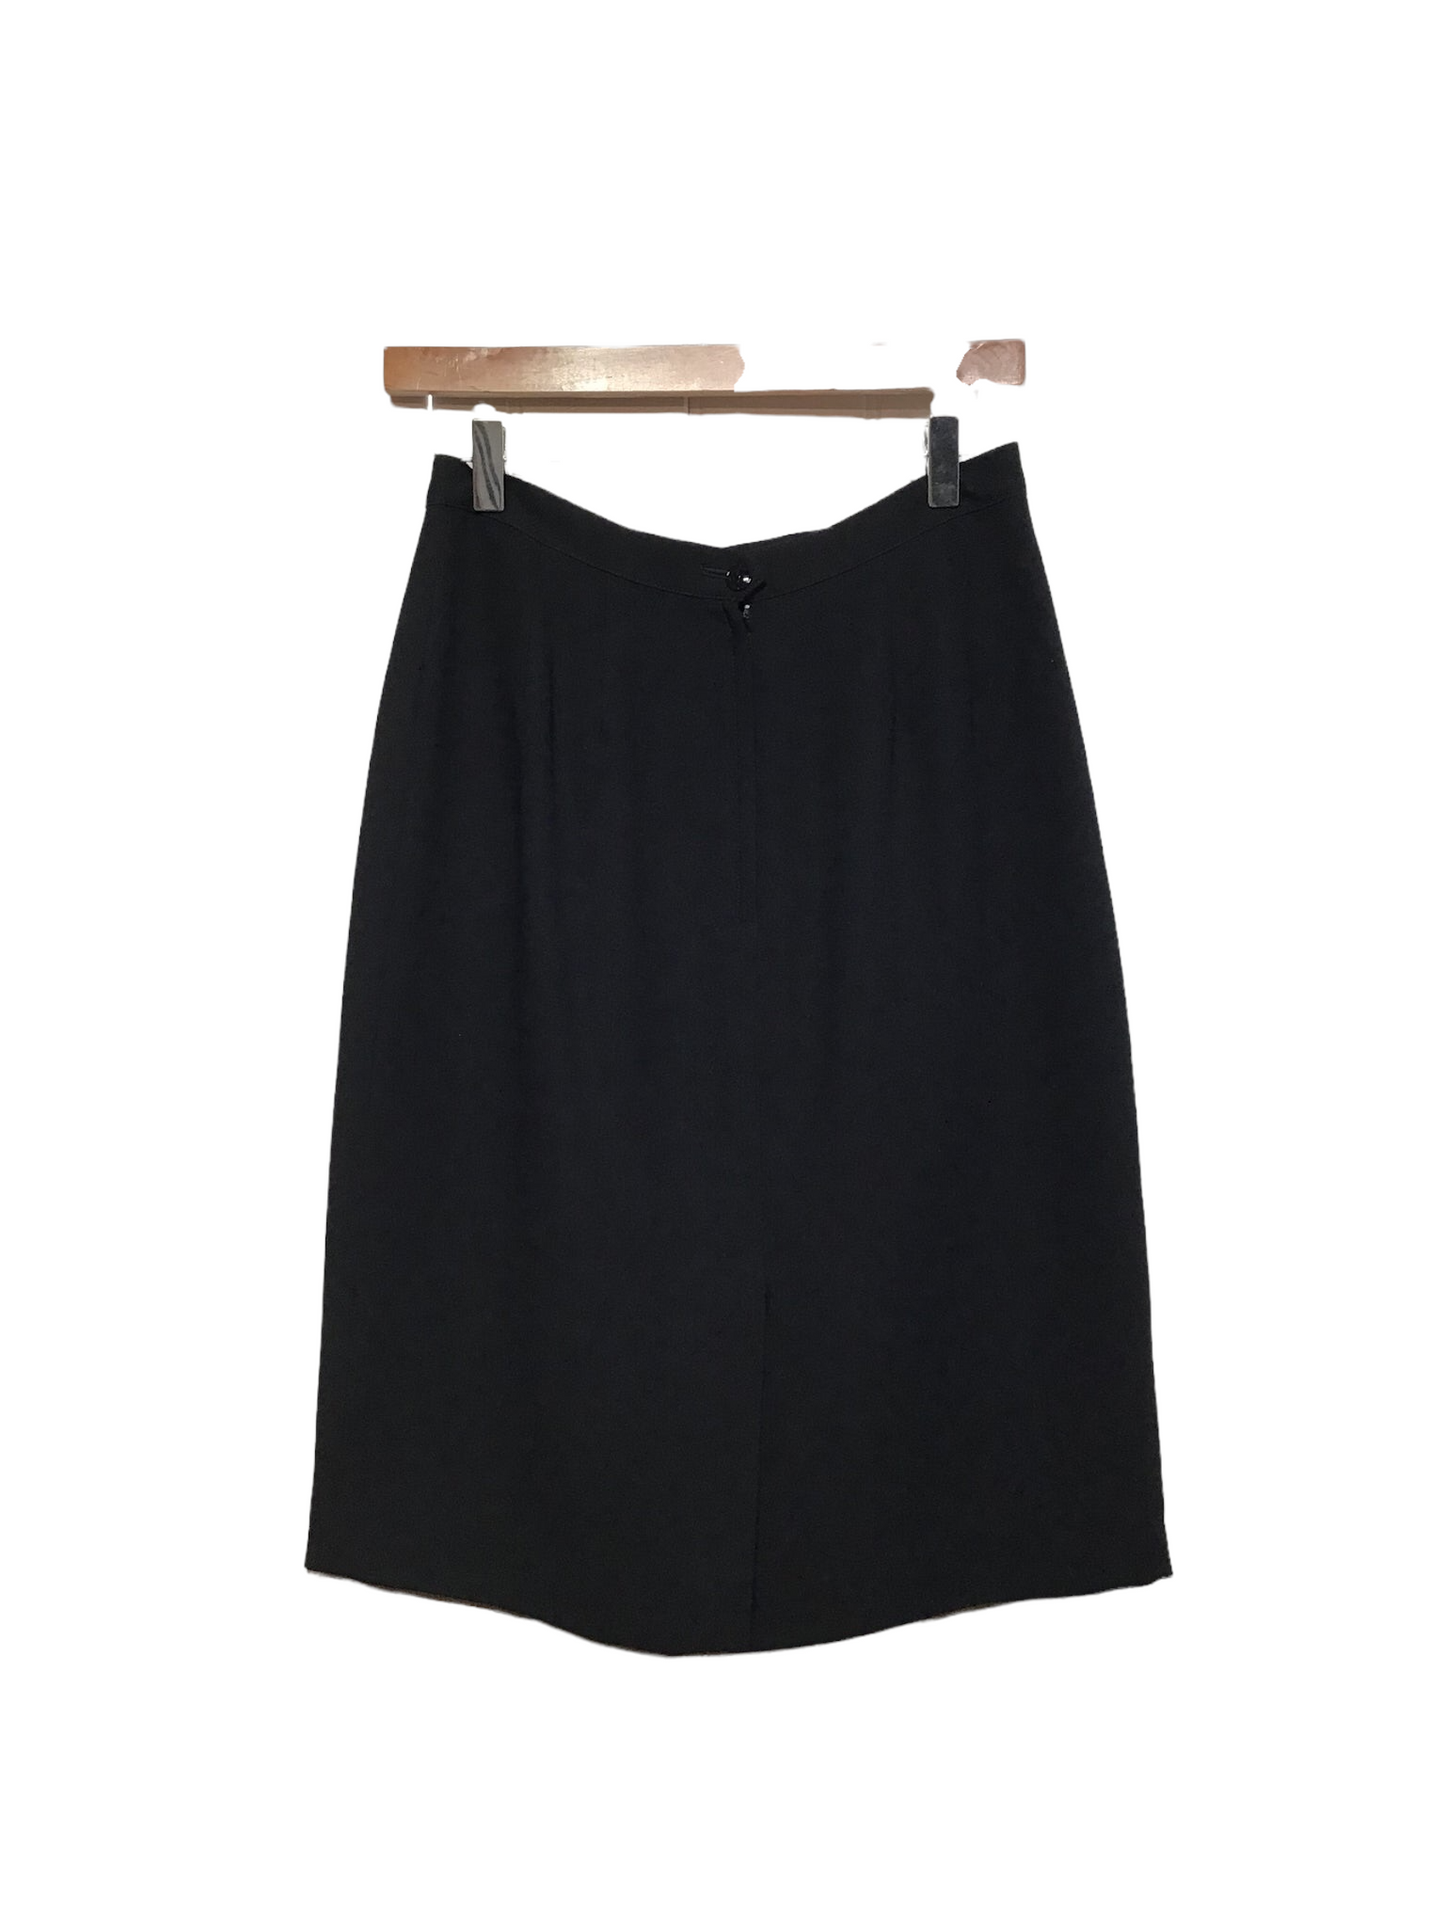 Black Midi Skirt (Size S)